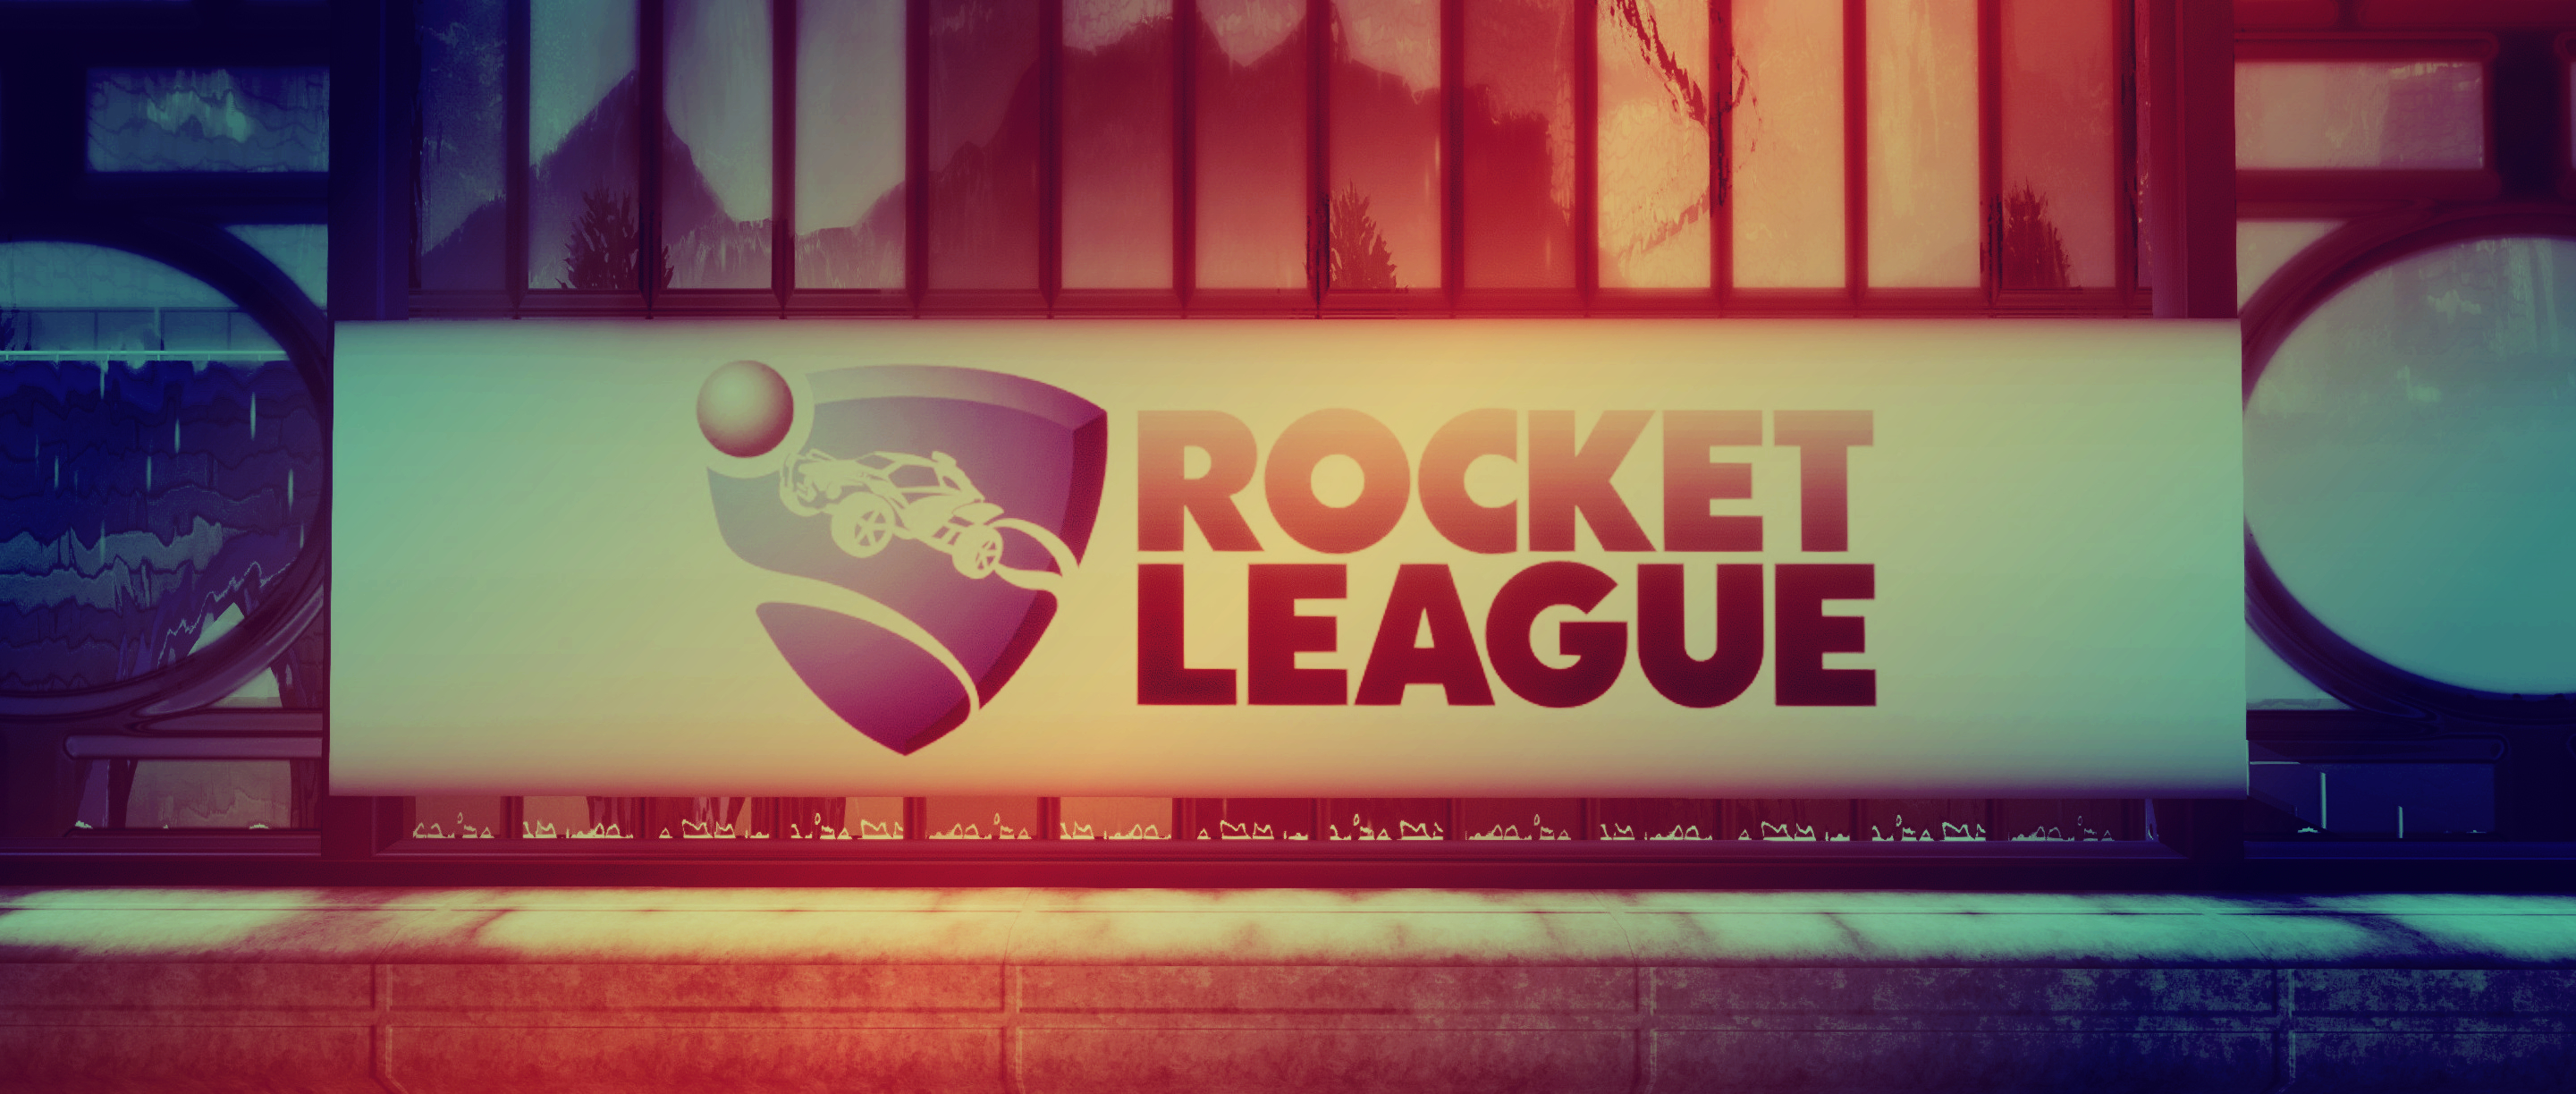 Rocket League 2881x1223